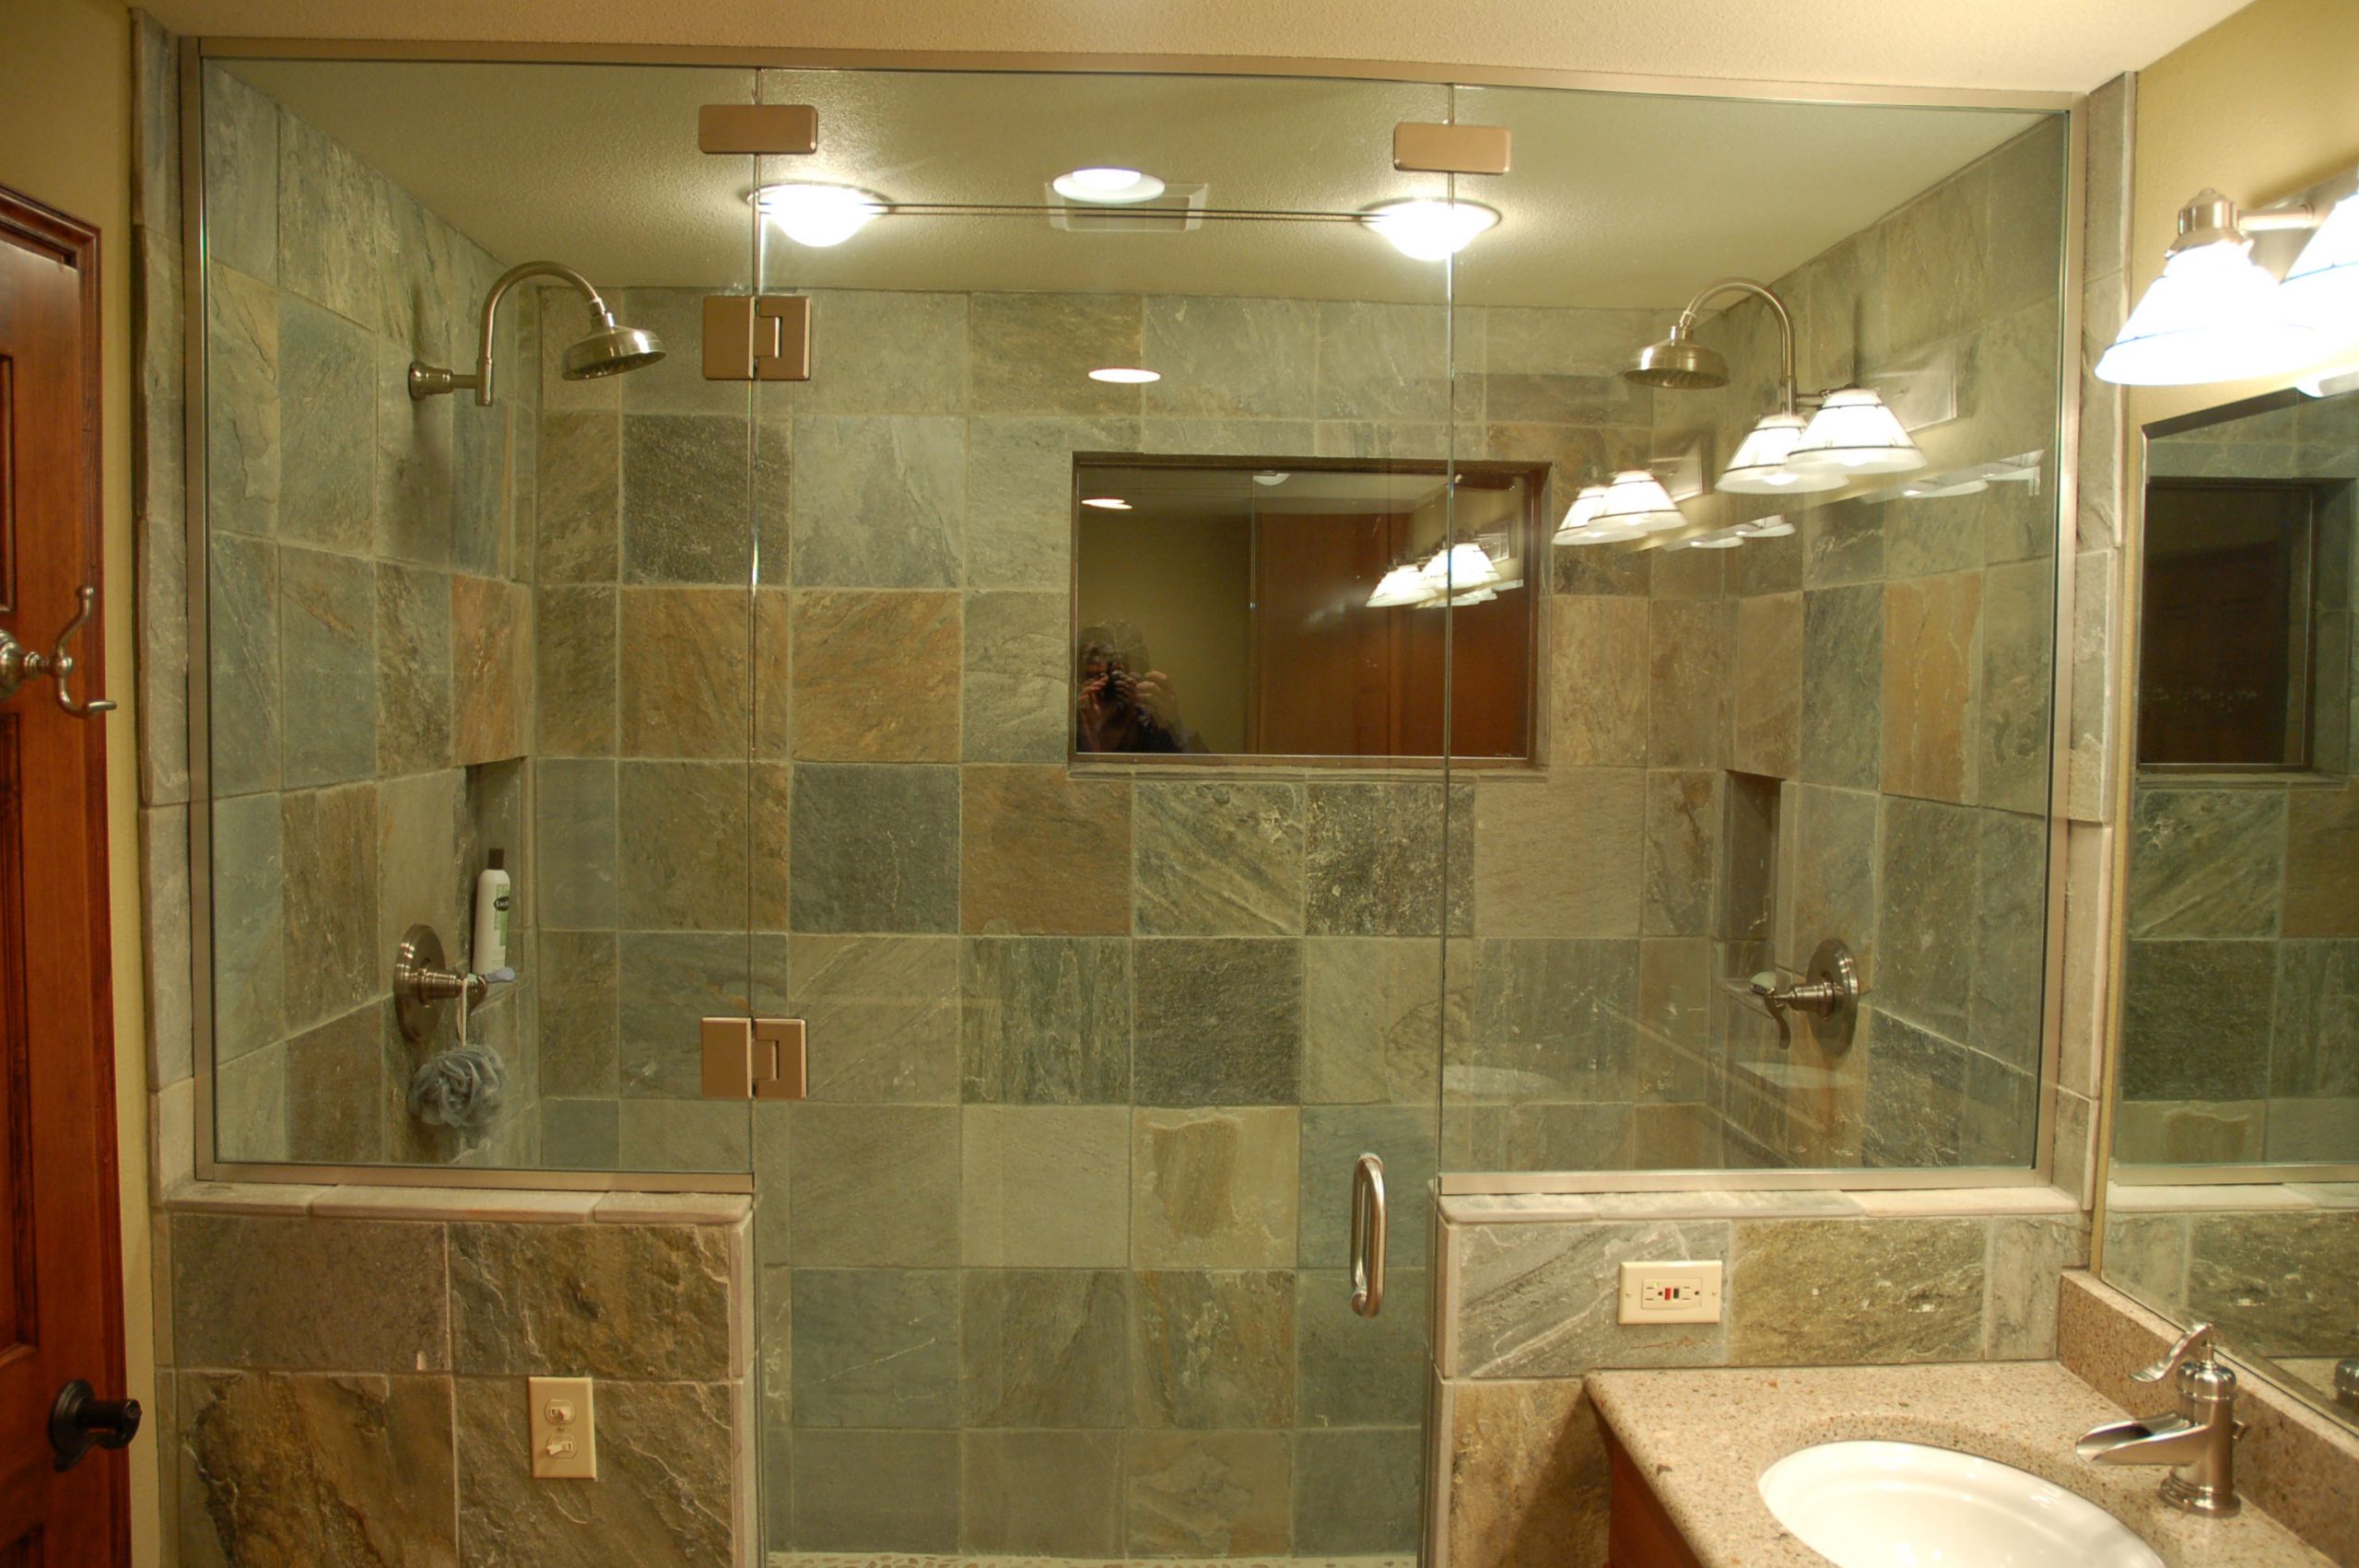 Slate Tile Bathroom Ideas
 40 wonderful pictures and ideas of 1920s bathroom tile designs